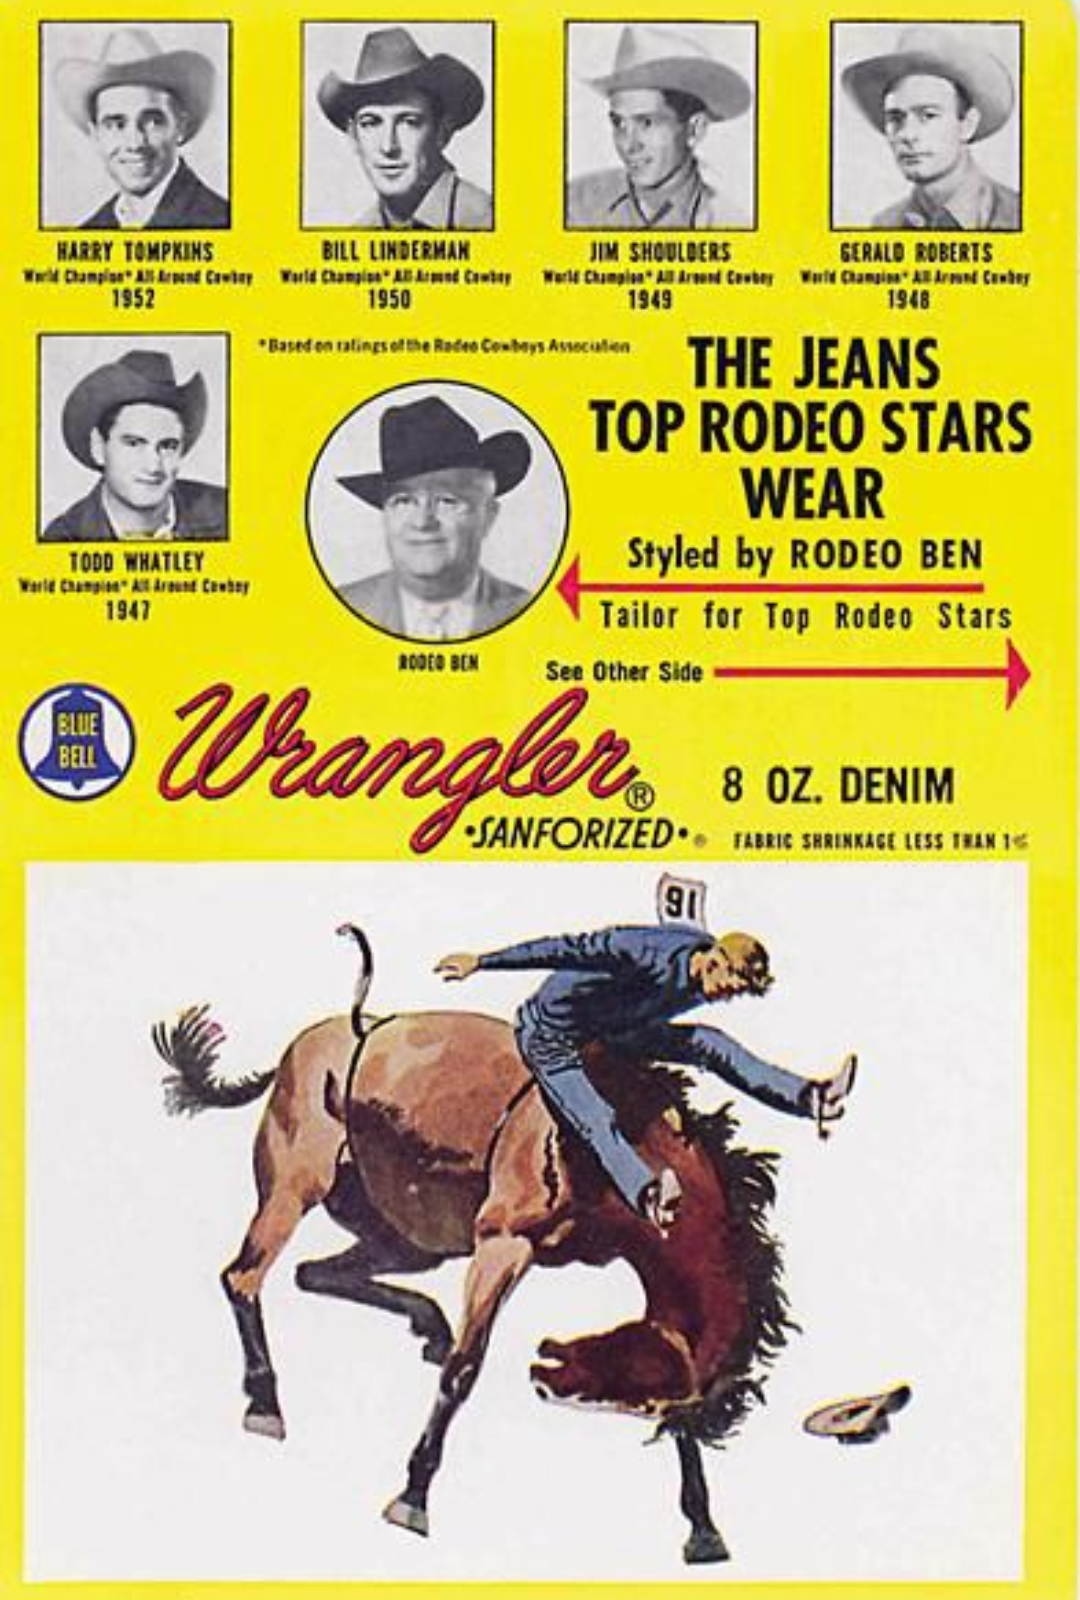 Wrangler Rodeo T-Shirt - Yellow Large, Men's